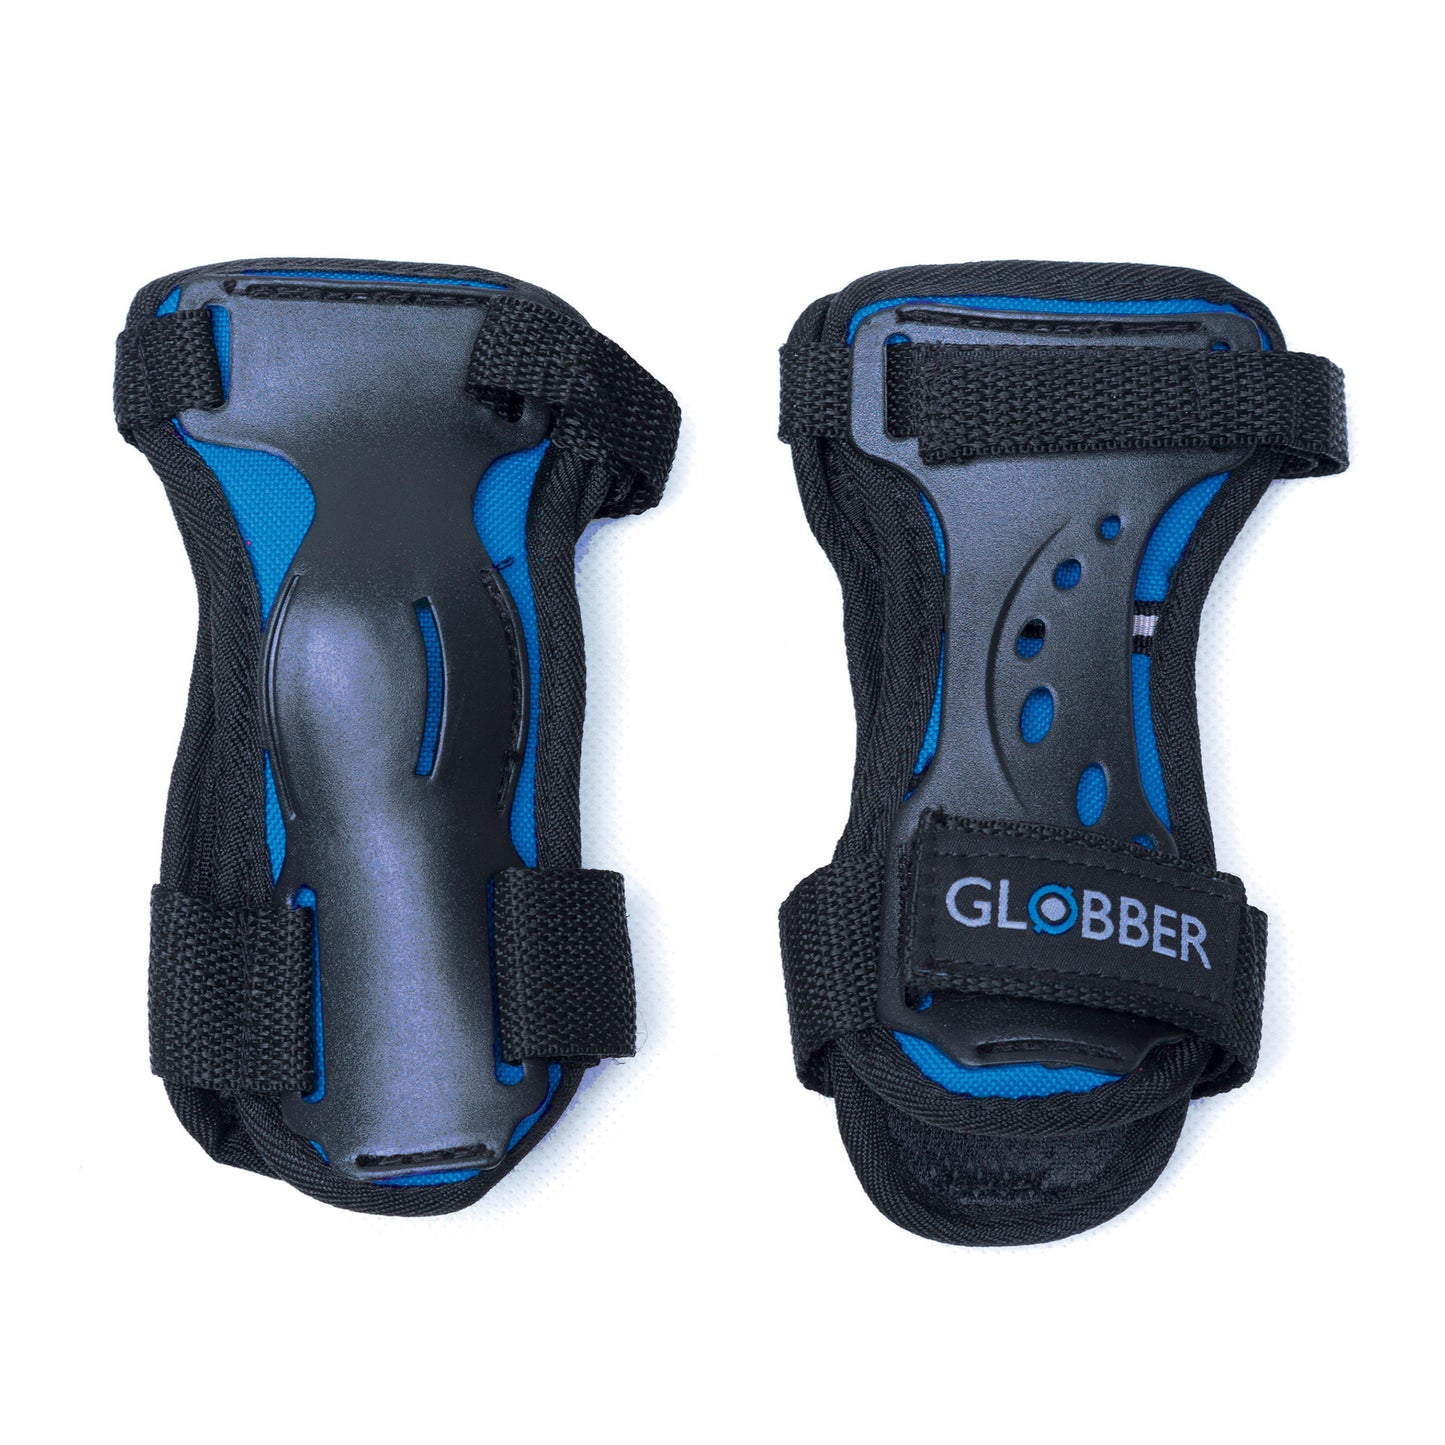 Globber Kids Protective Gear 3 in 1 Set 兒童關節保護墊套裝